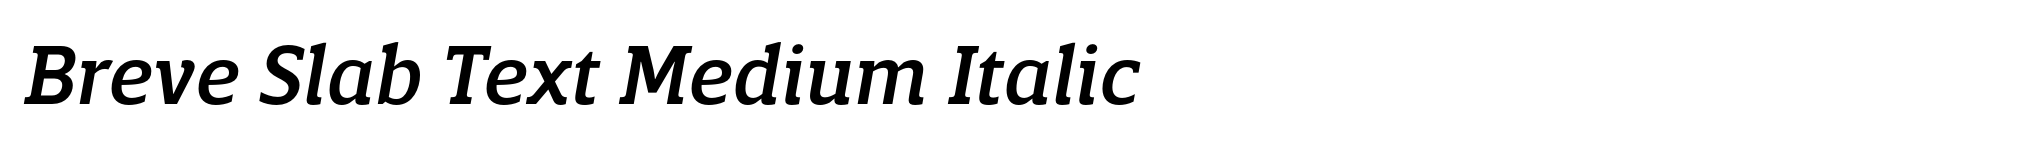 Breve Slab Text Medium Italic image